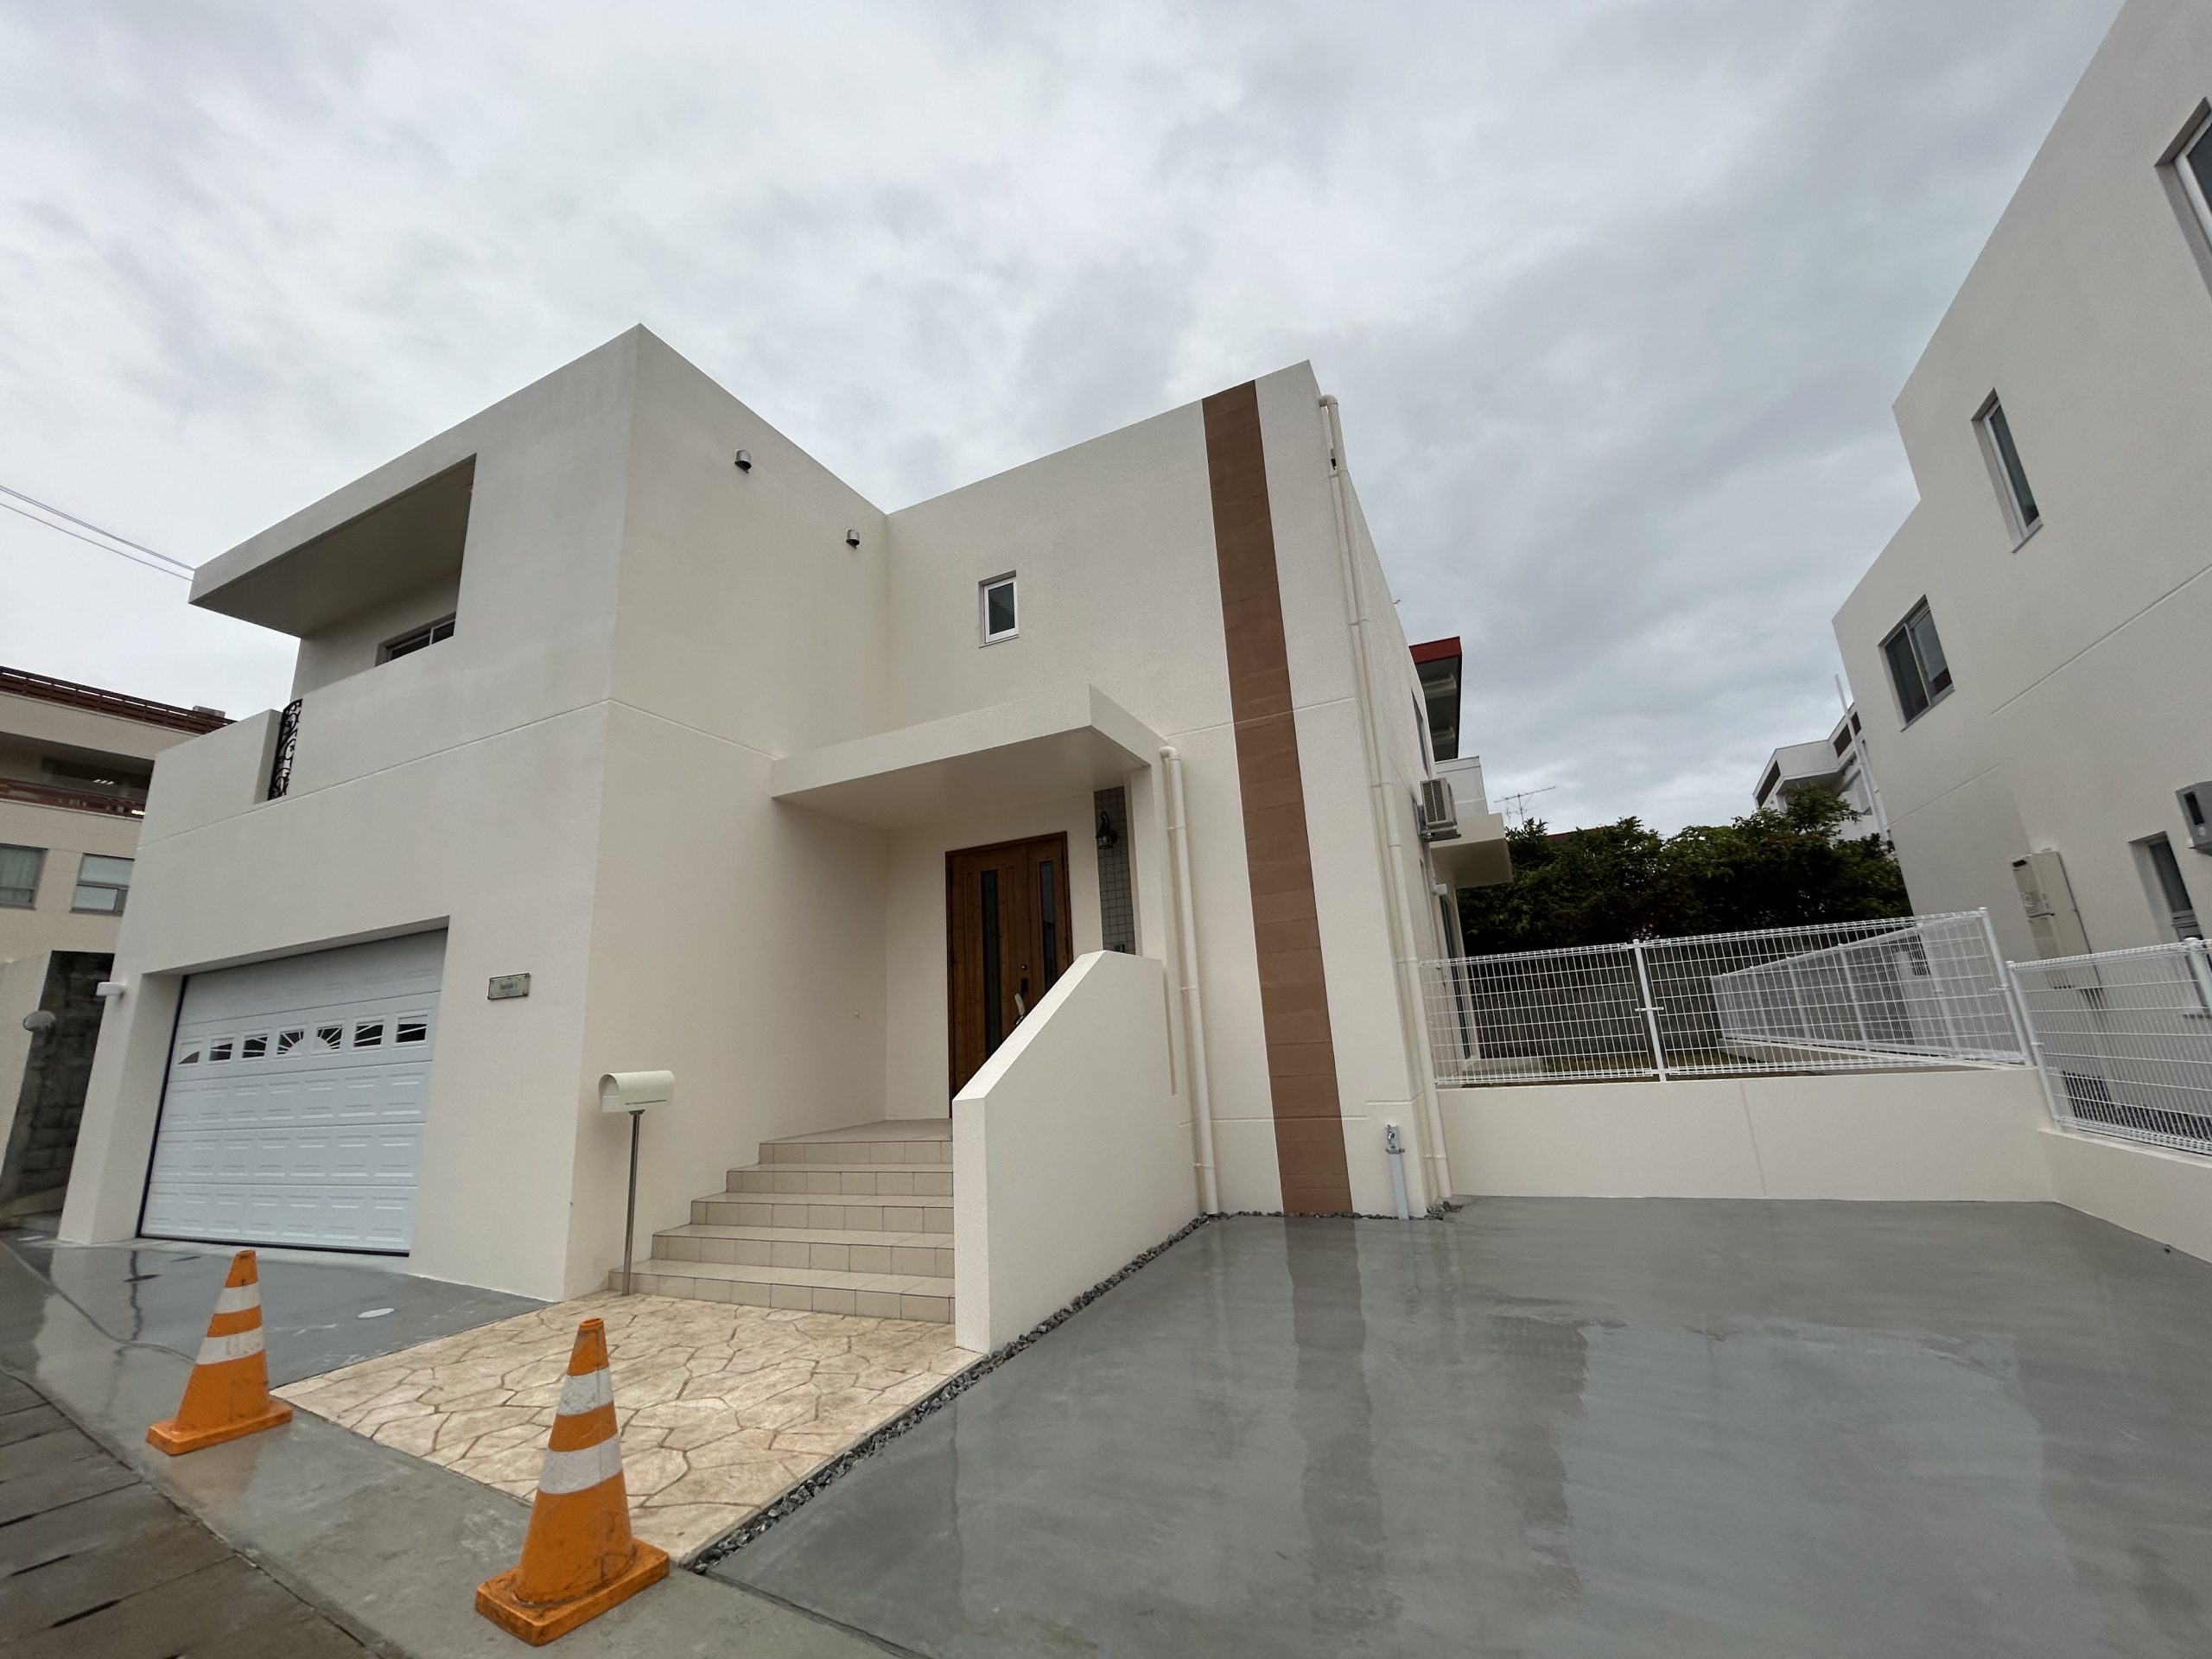 Brand new 5 bedroom house in Kitanakagusuku